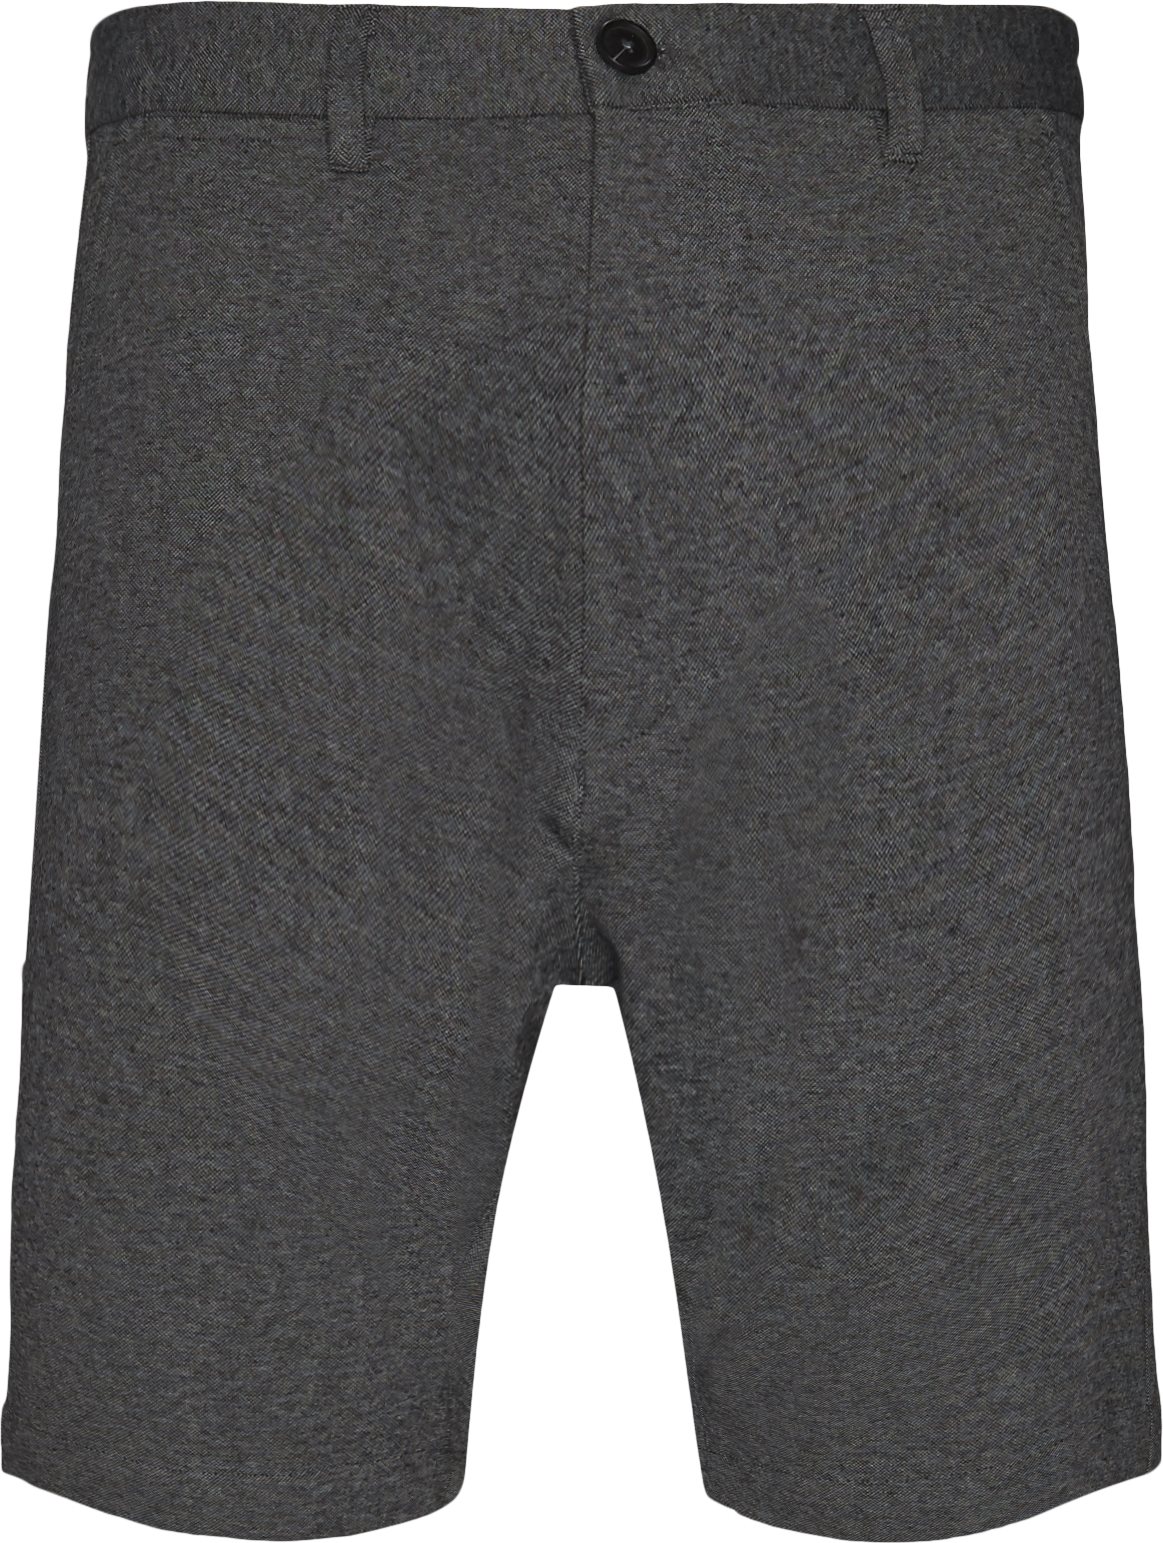 Jason Chino shorts - Shorts - Regular fit - Grå